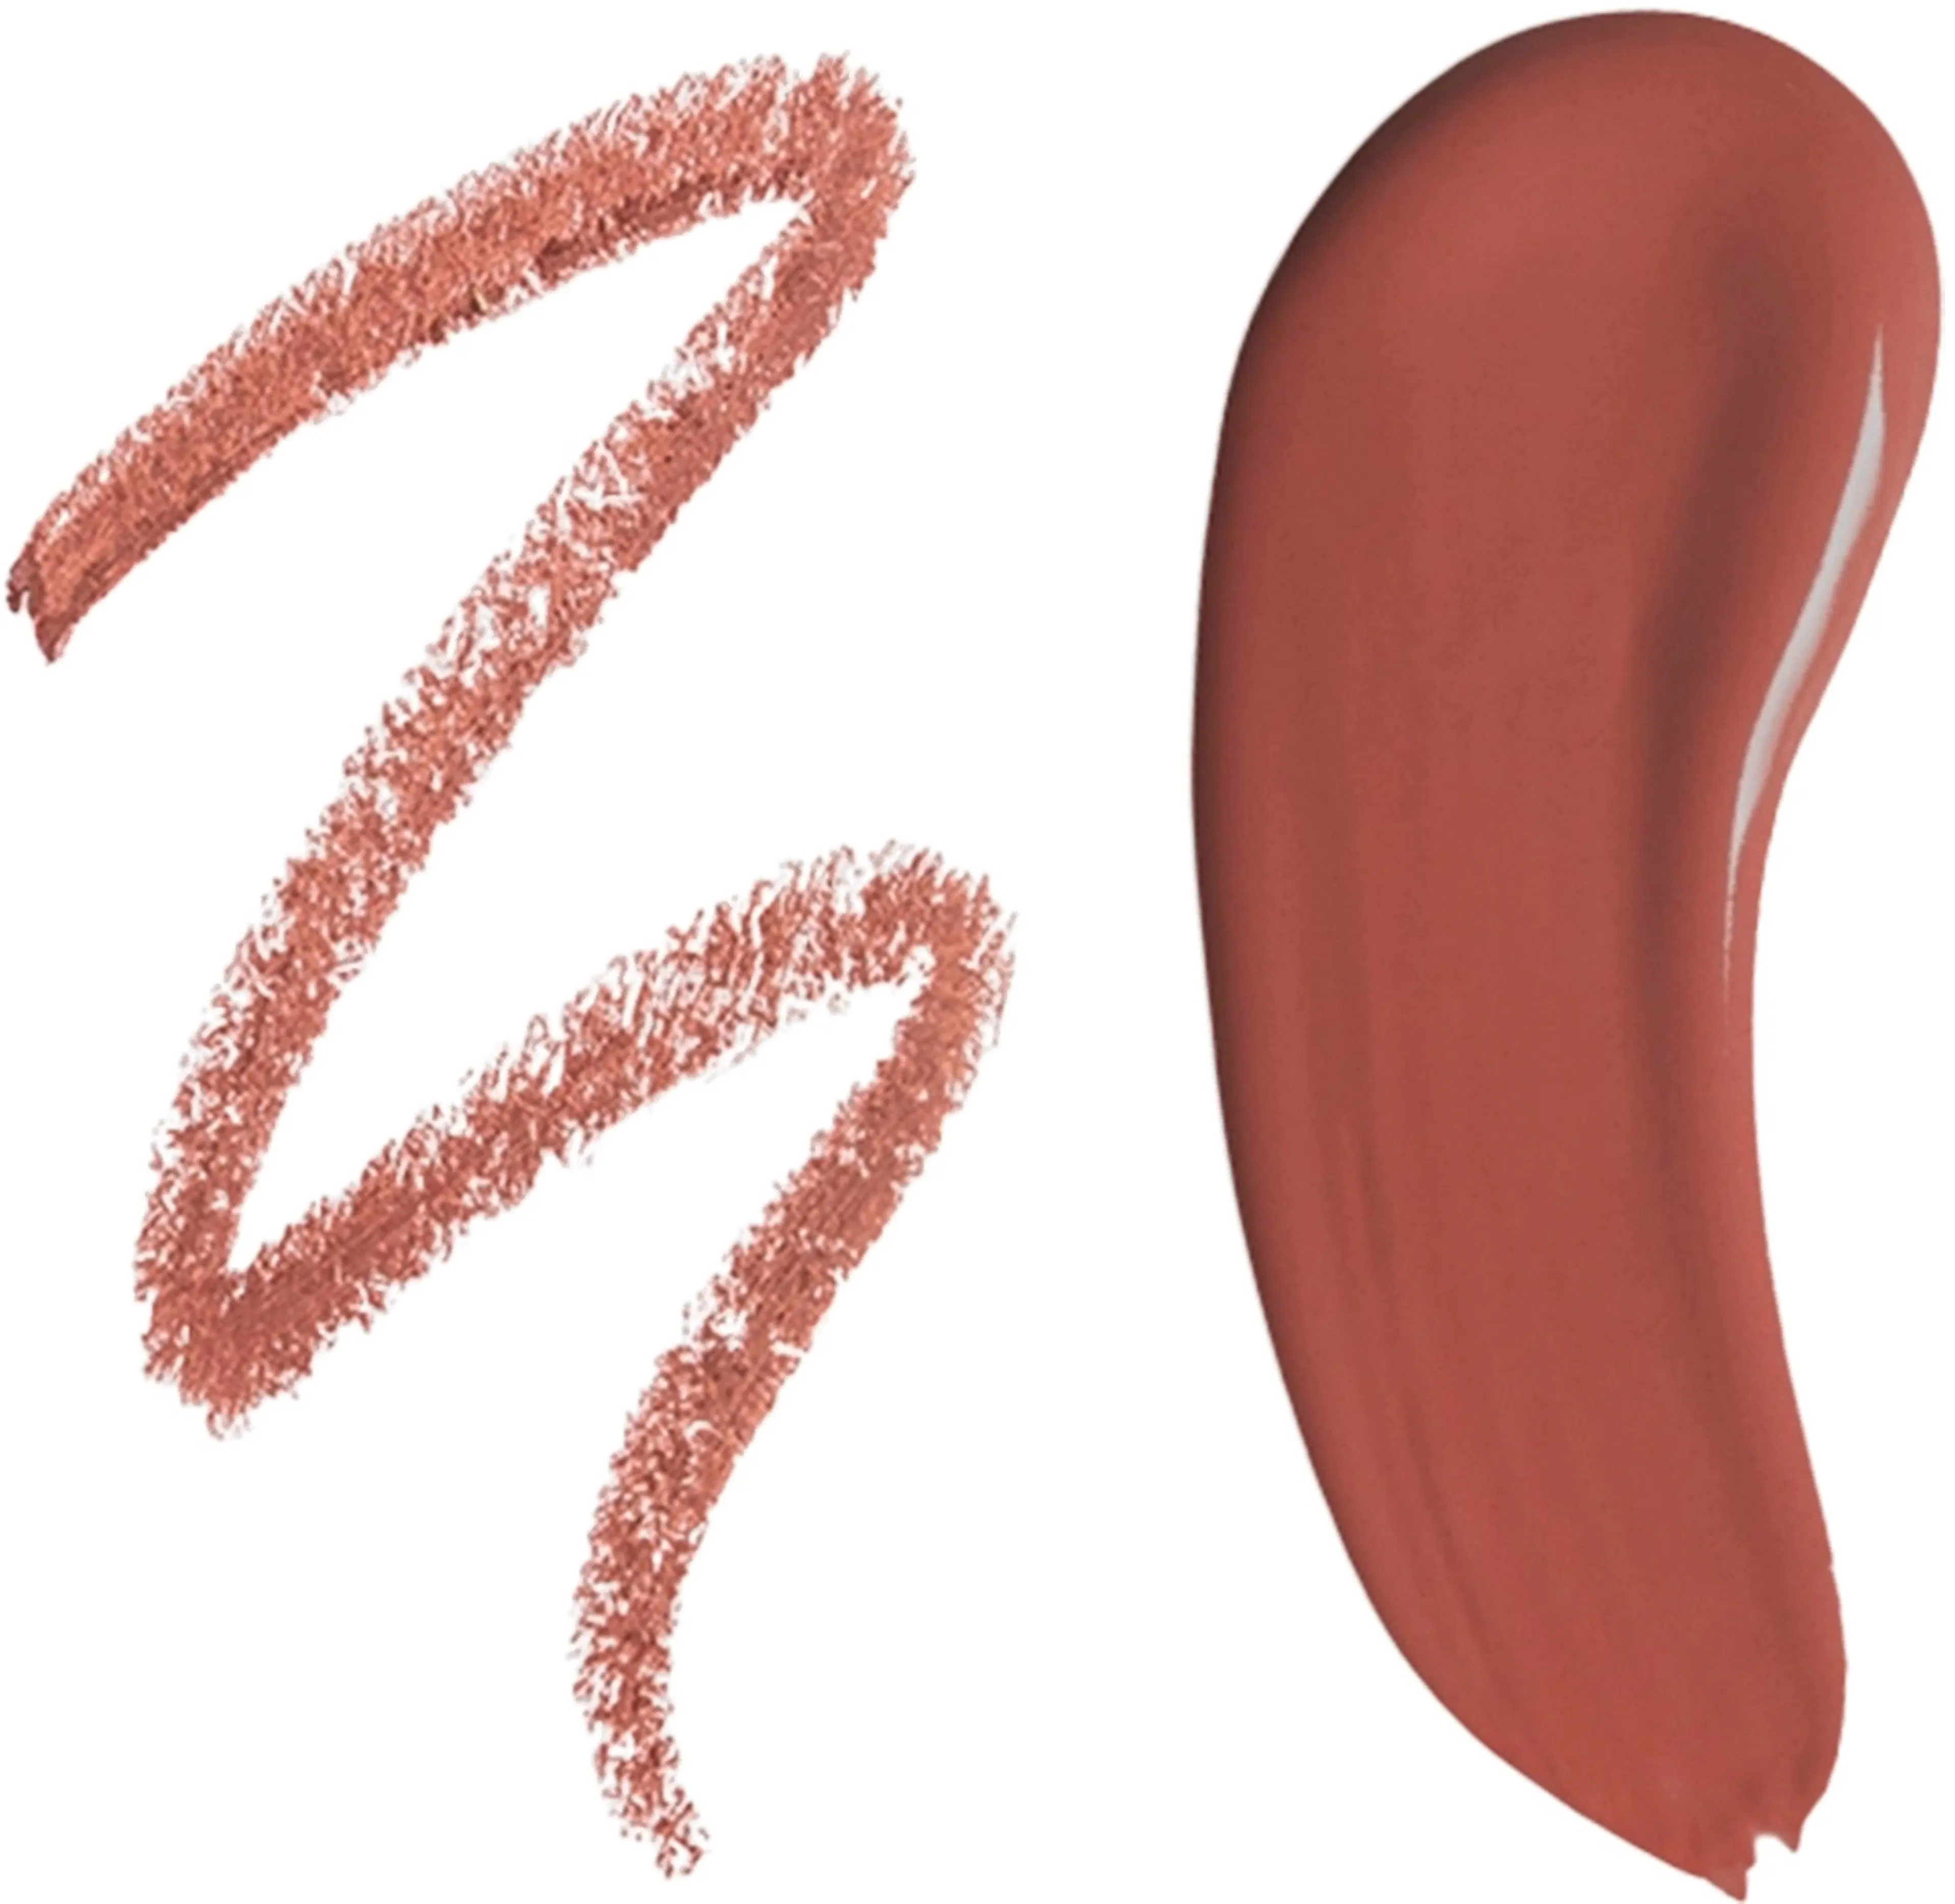 Profusion Cosmetics Lip Envy Lip Gloss & Lip Liner Duo huulikiilto- ja rajauskynäsetti